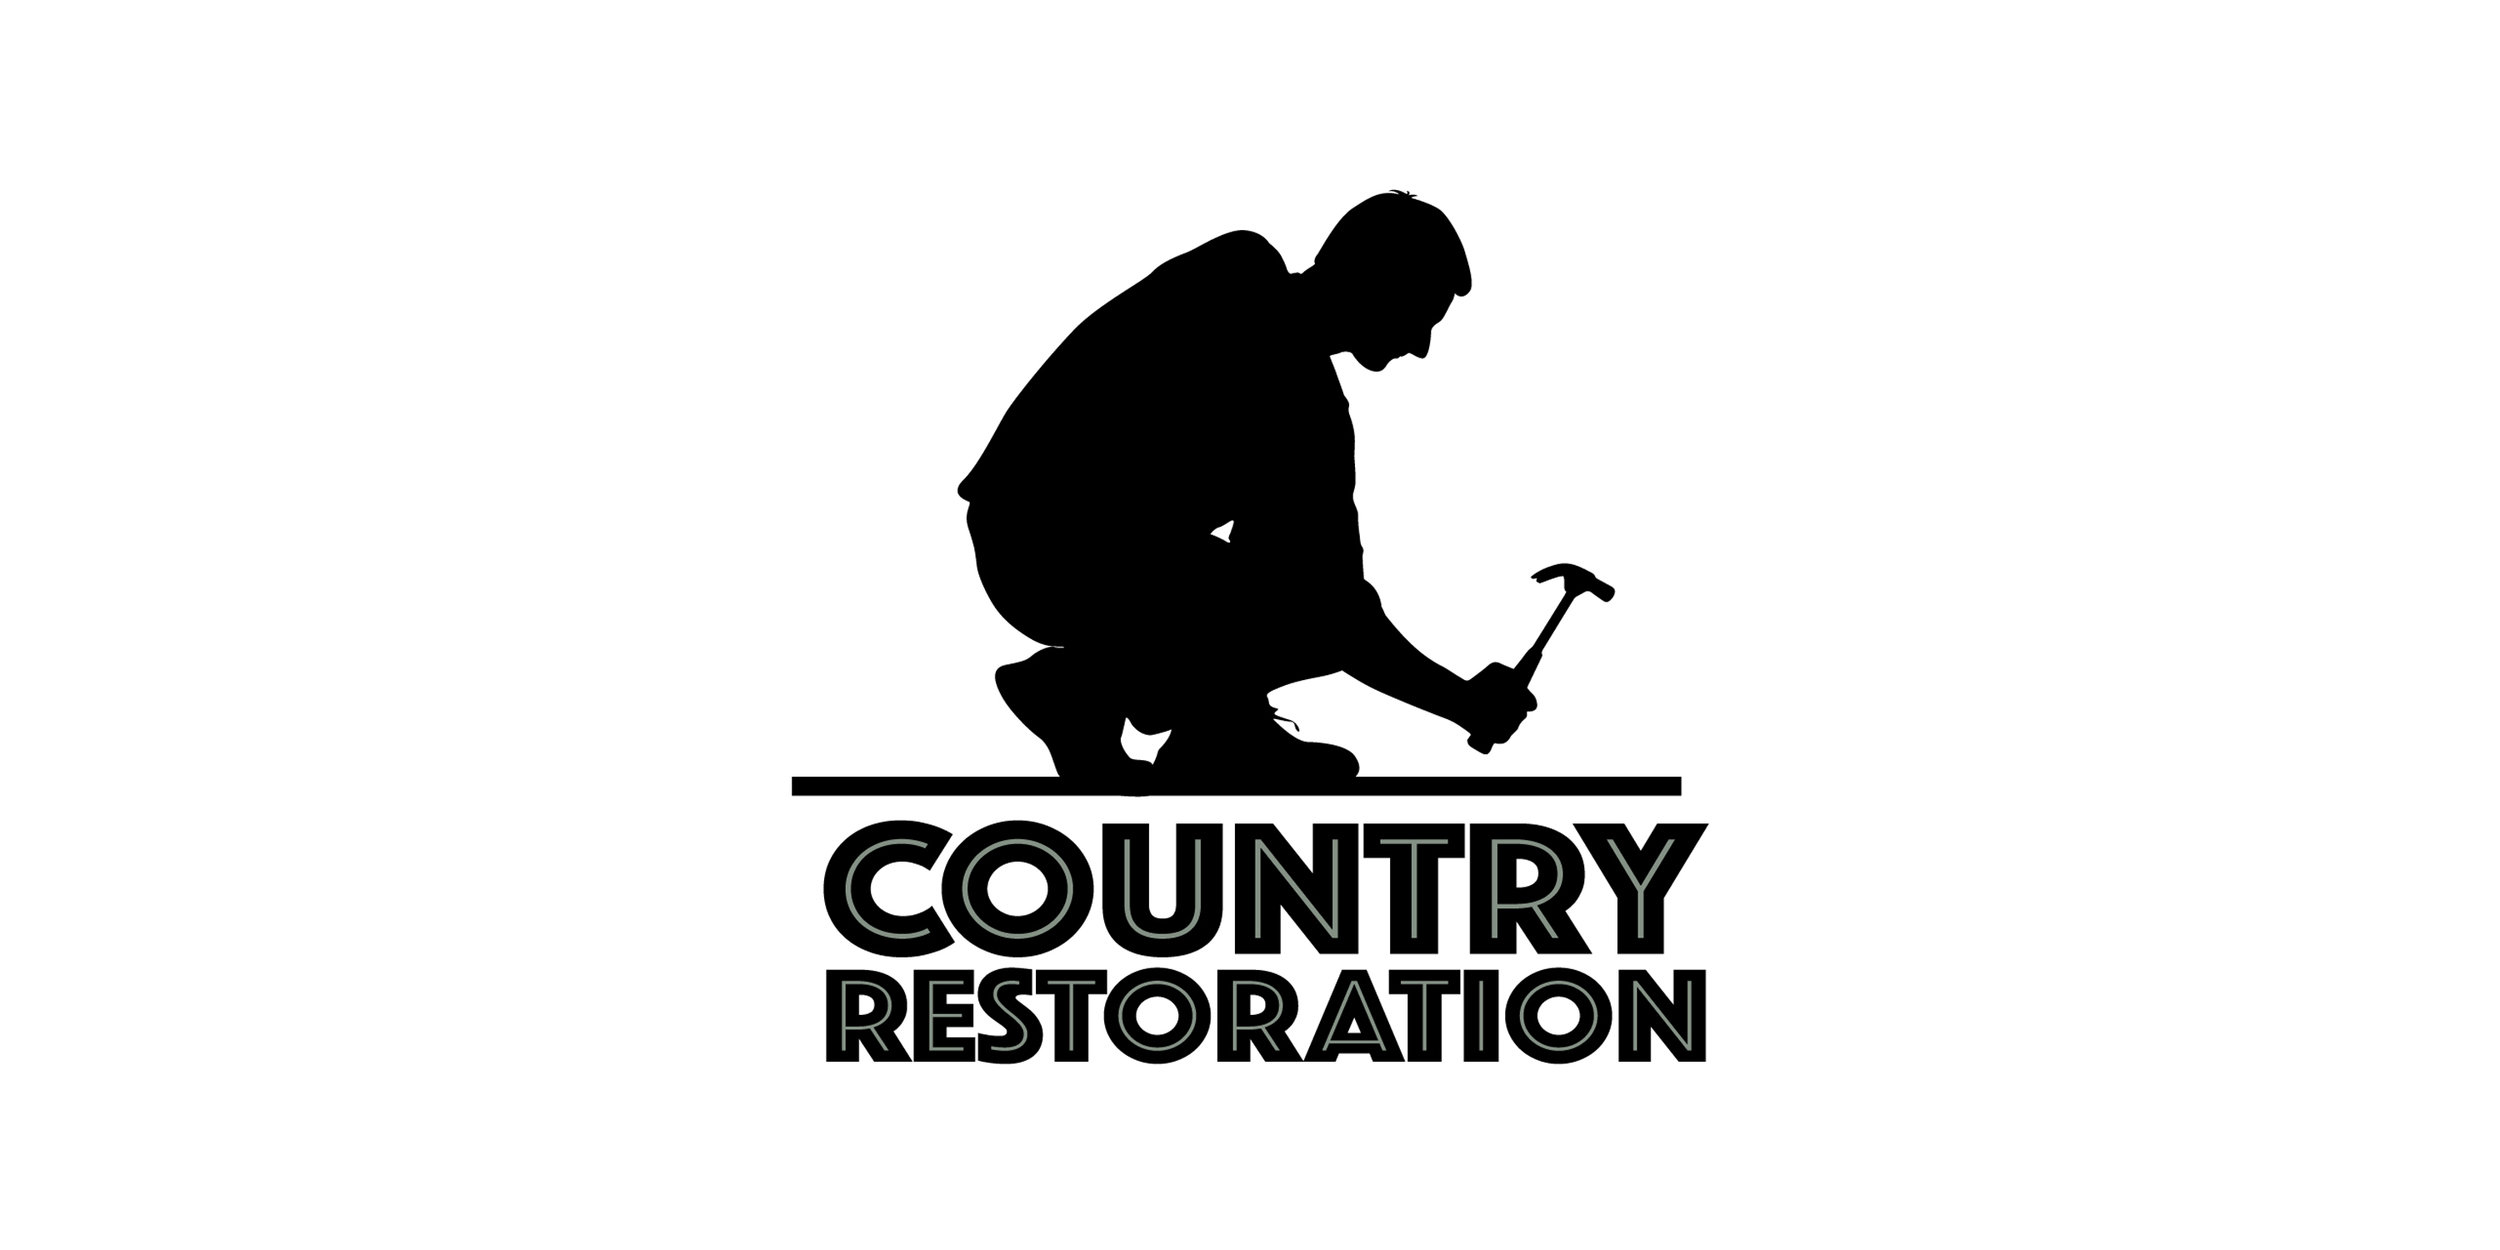 Country_Restoration_1.jpg